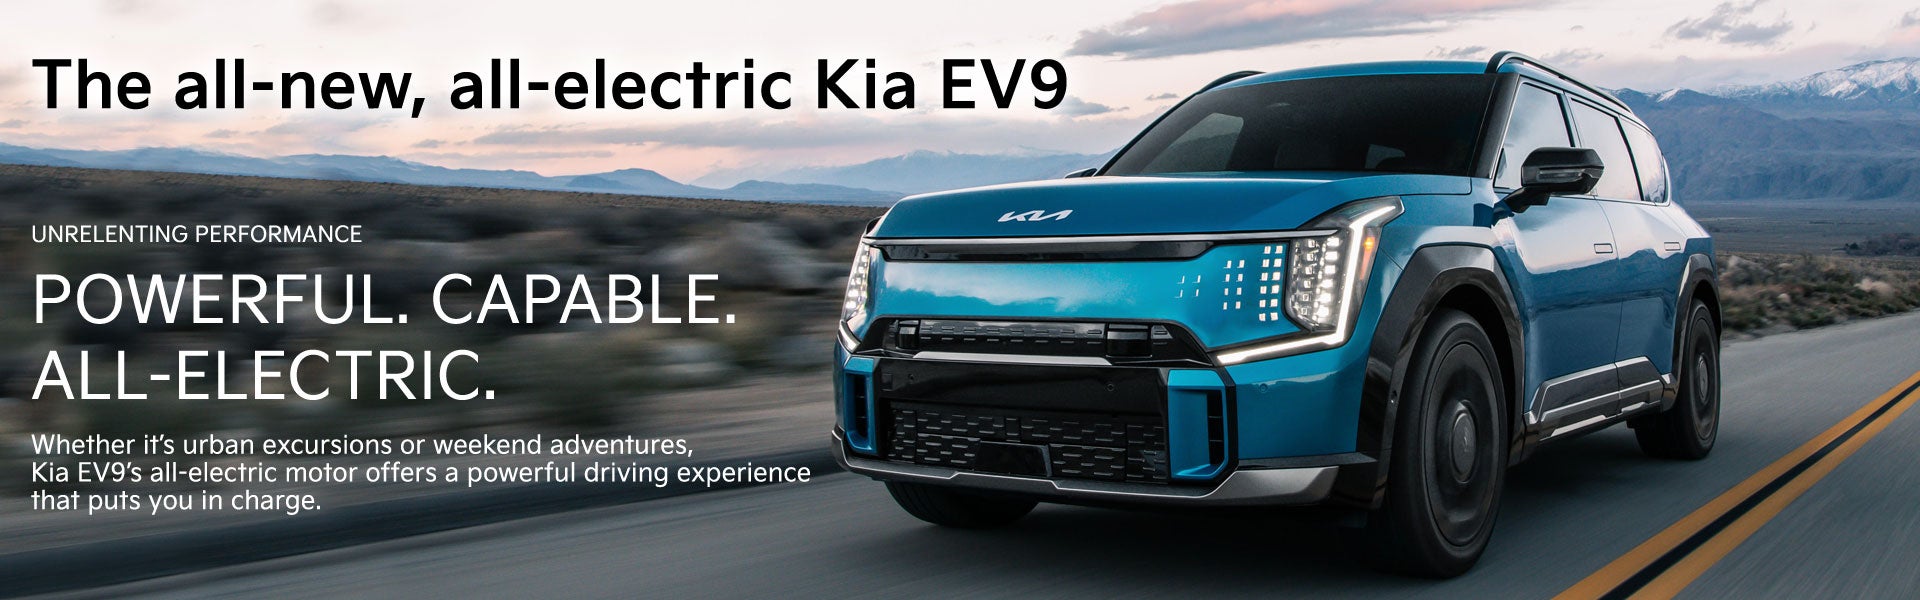 The All-New, All Electric Kia EV9